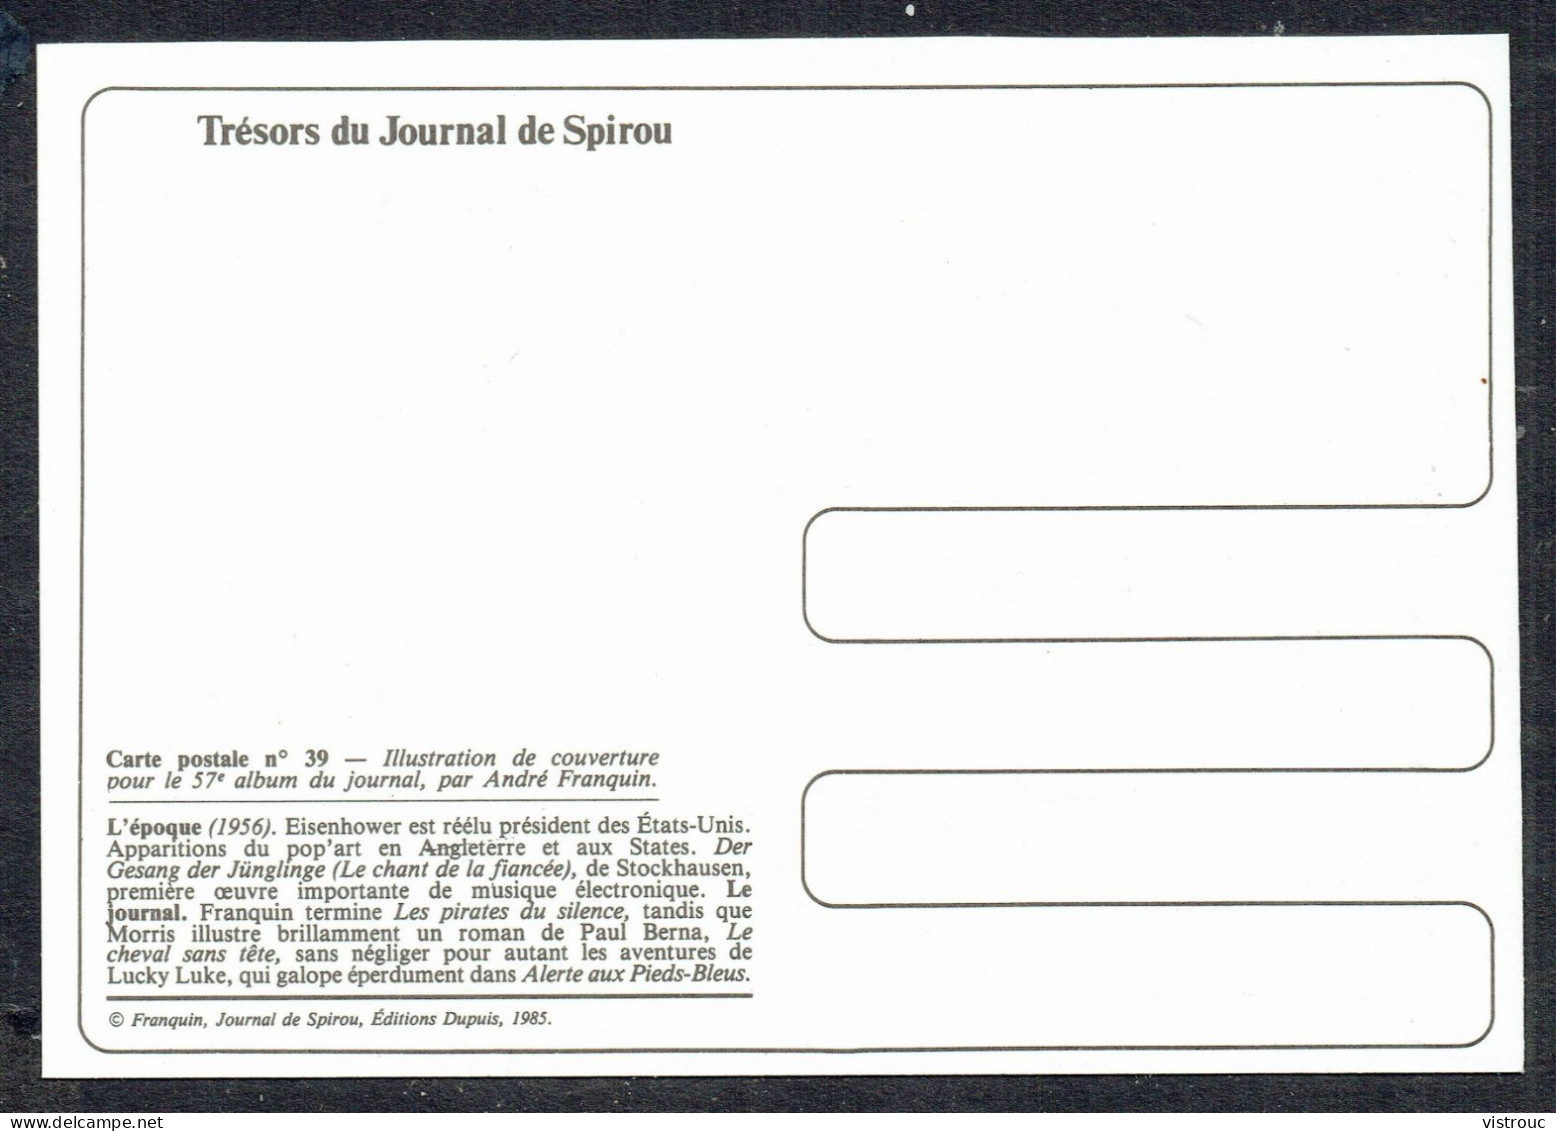 SPIROU - CP N° 39 : Illustration Couverture Album N° 57 De FRANQUIN - Non Circulé - Not Circulated - Ed. DUPUIS - 1985. - Comics